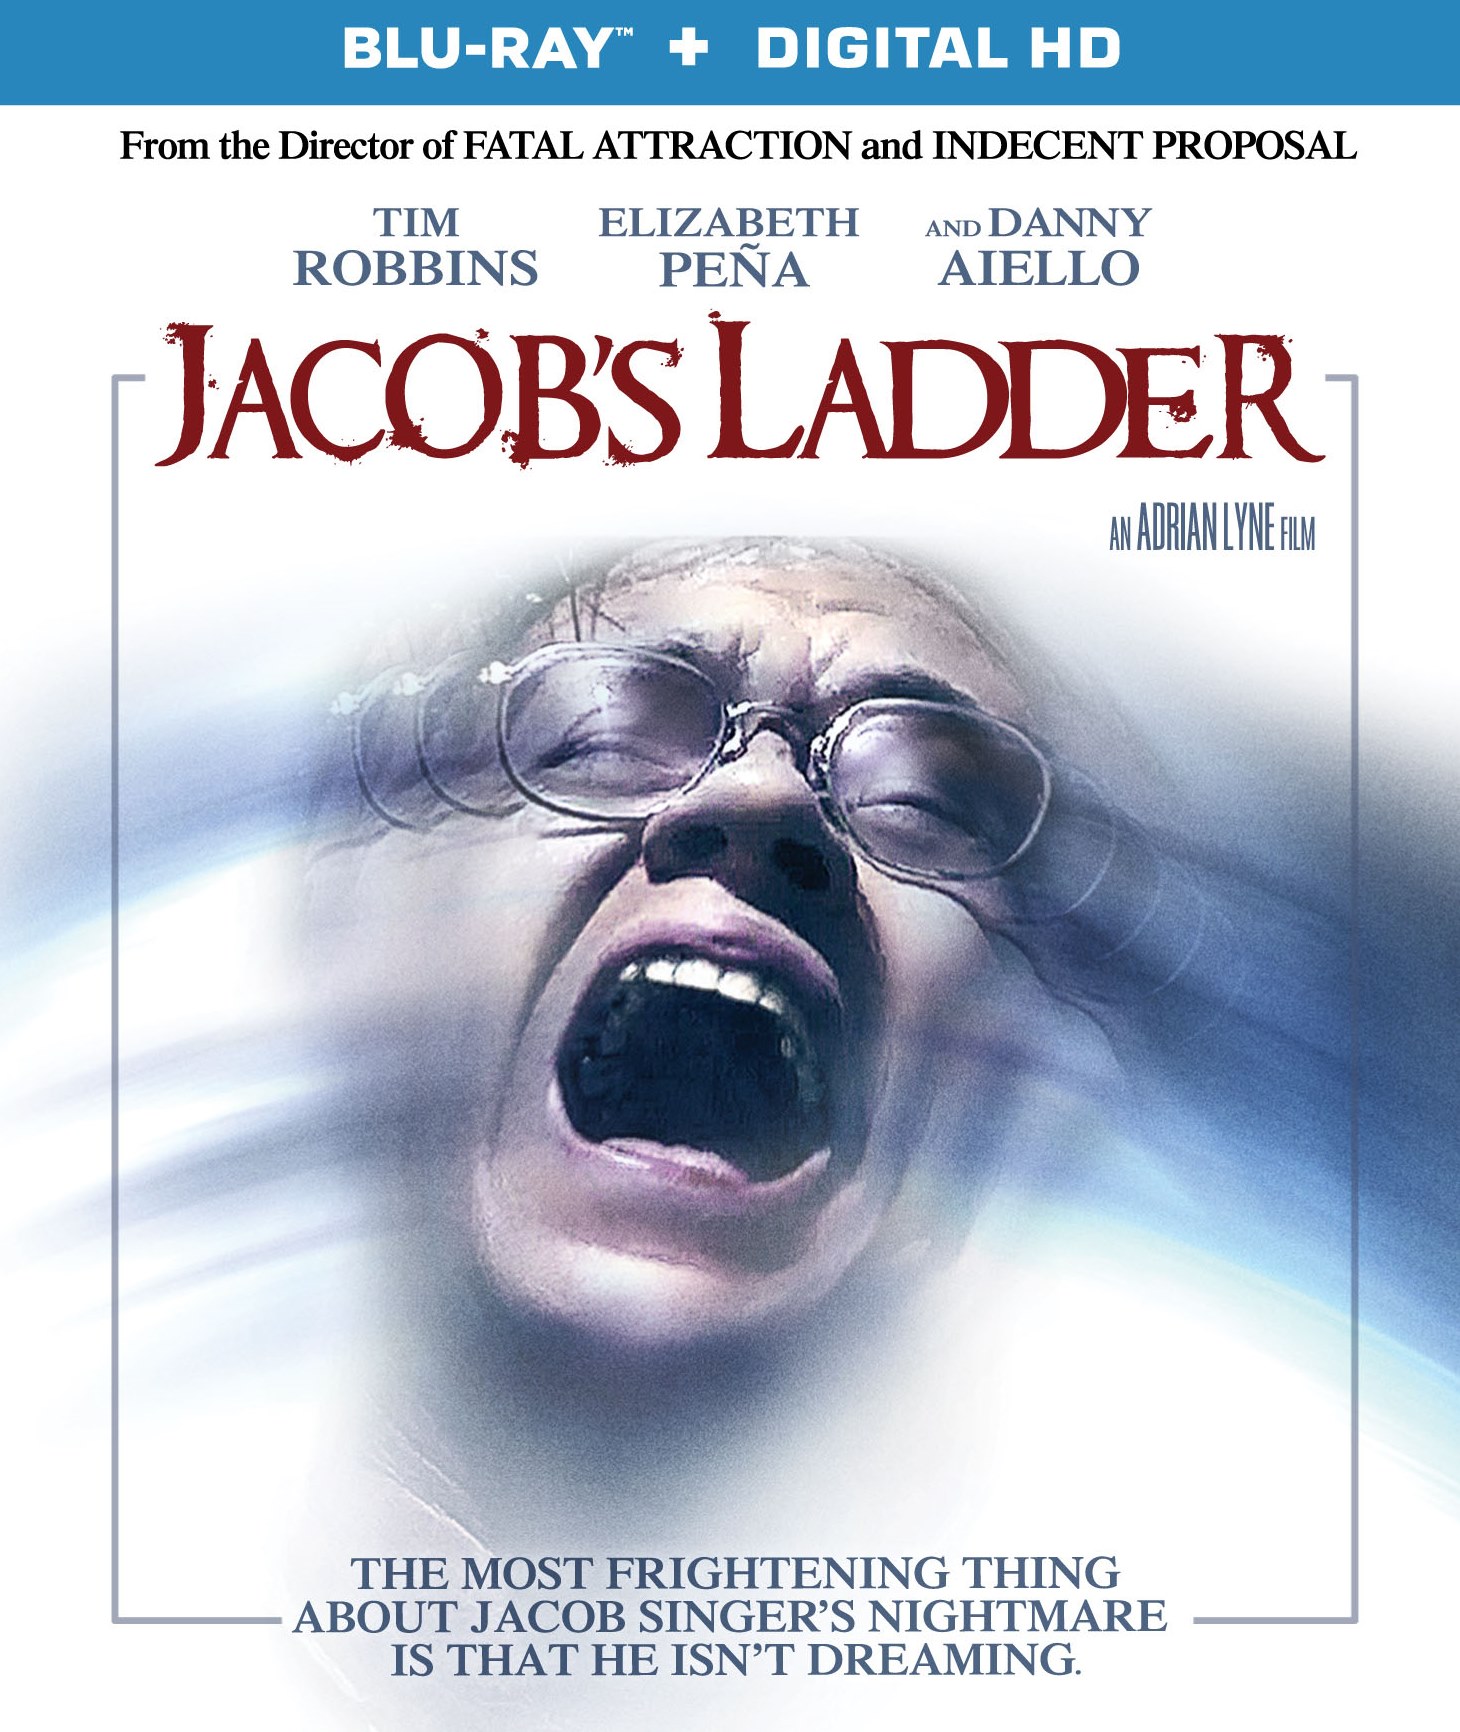 NETHERWORLD presents: Jacob's Ladder at Studio Movie Grill